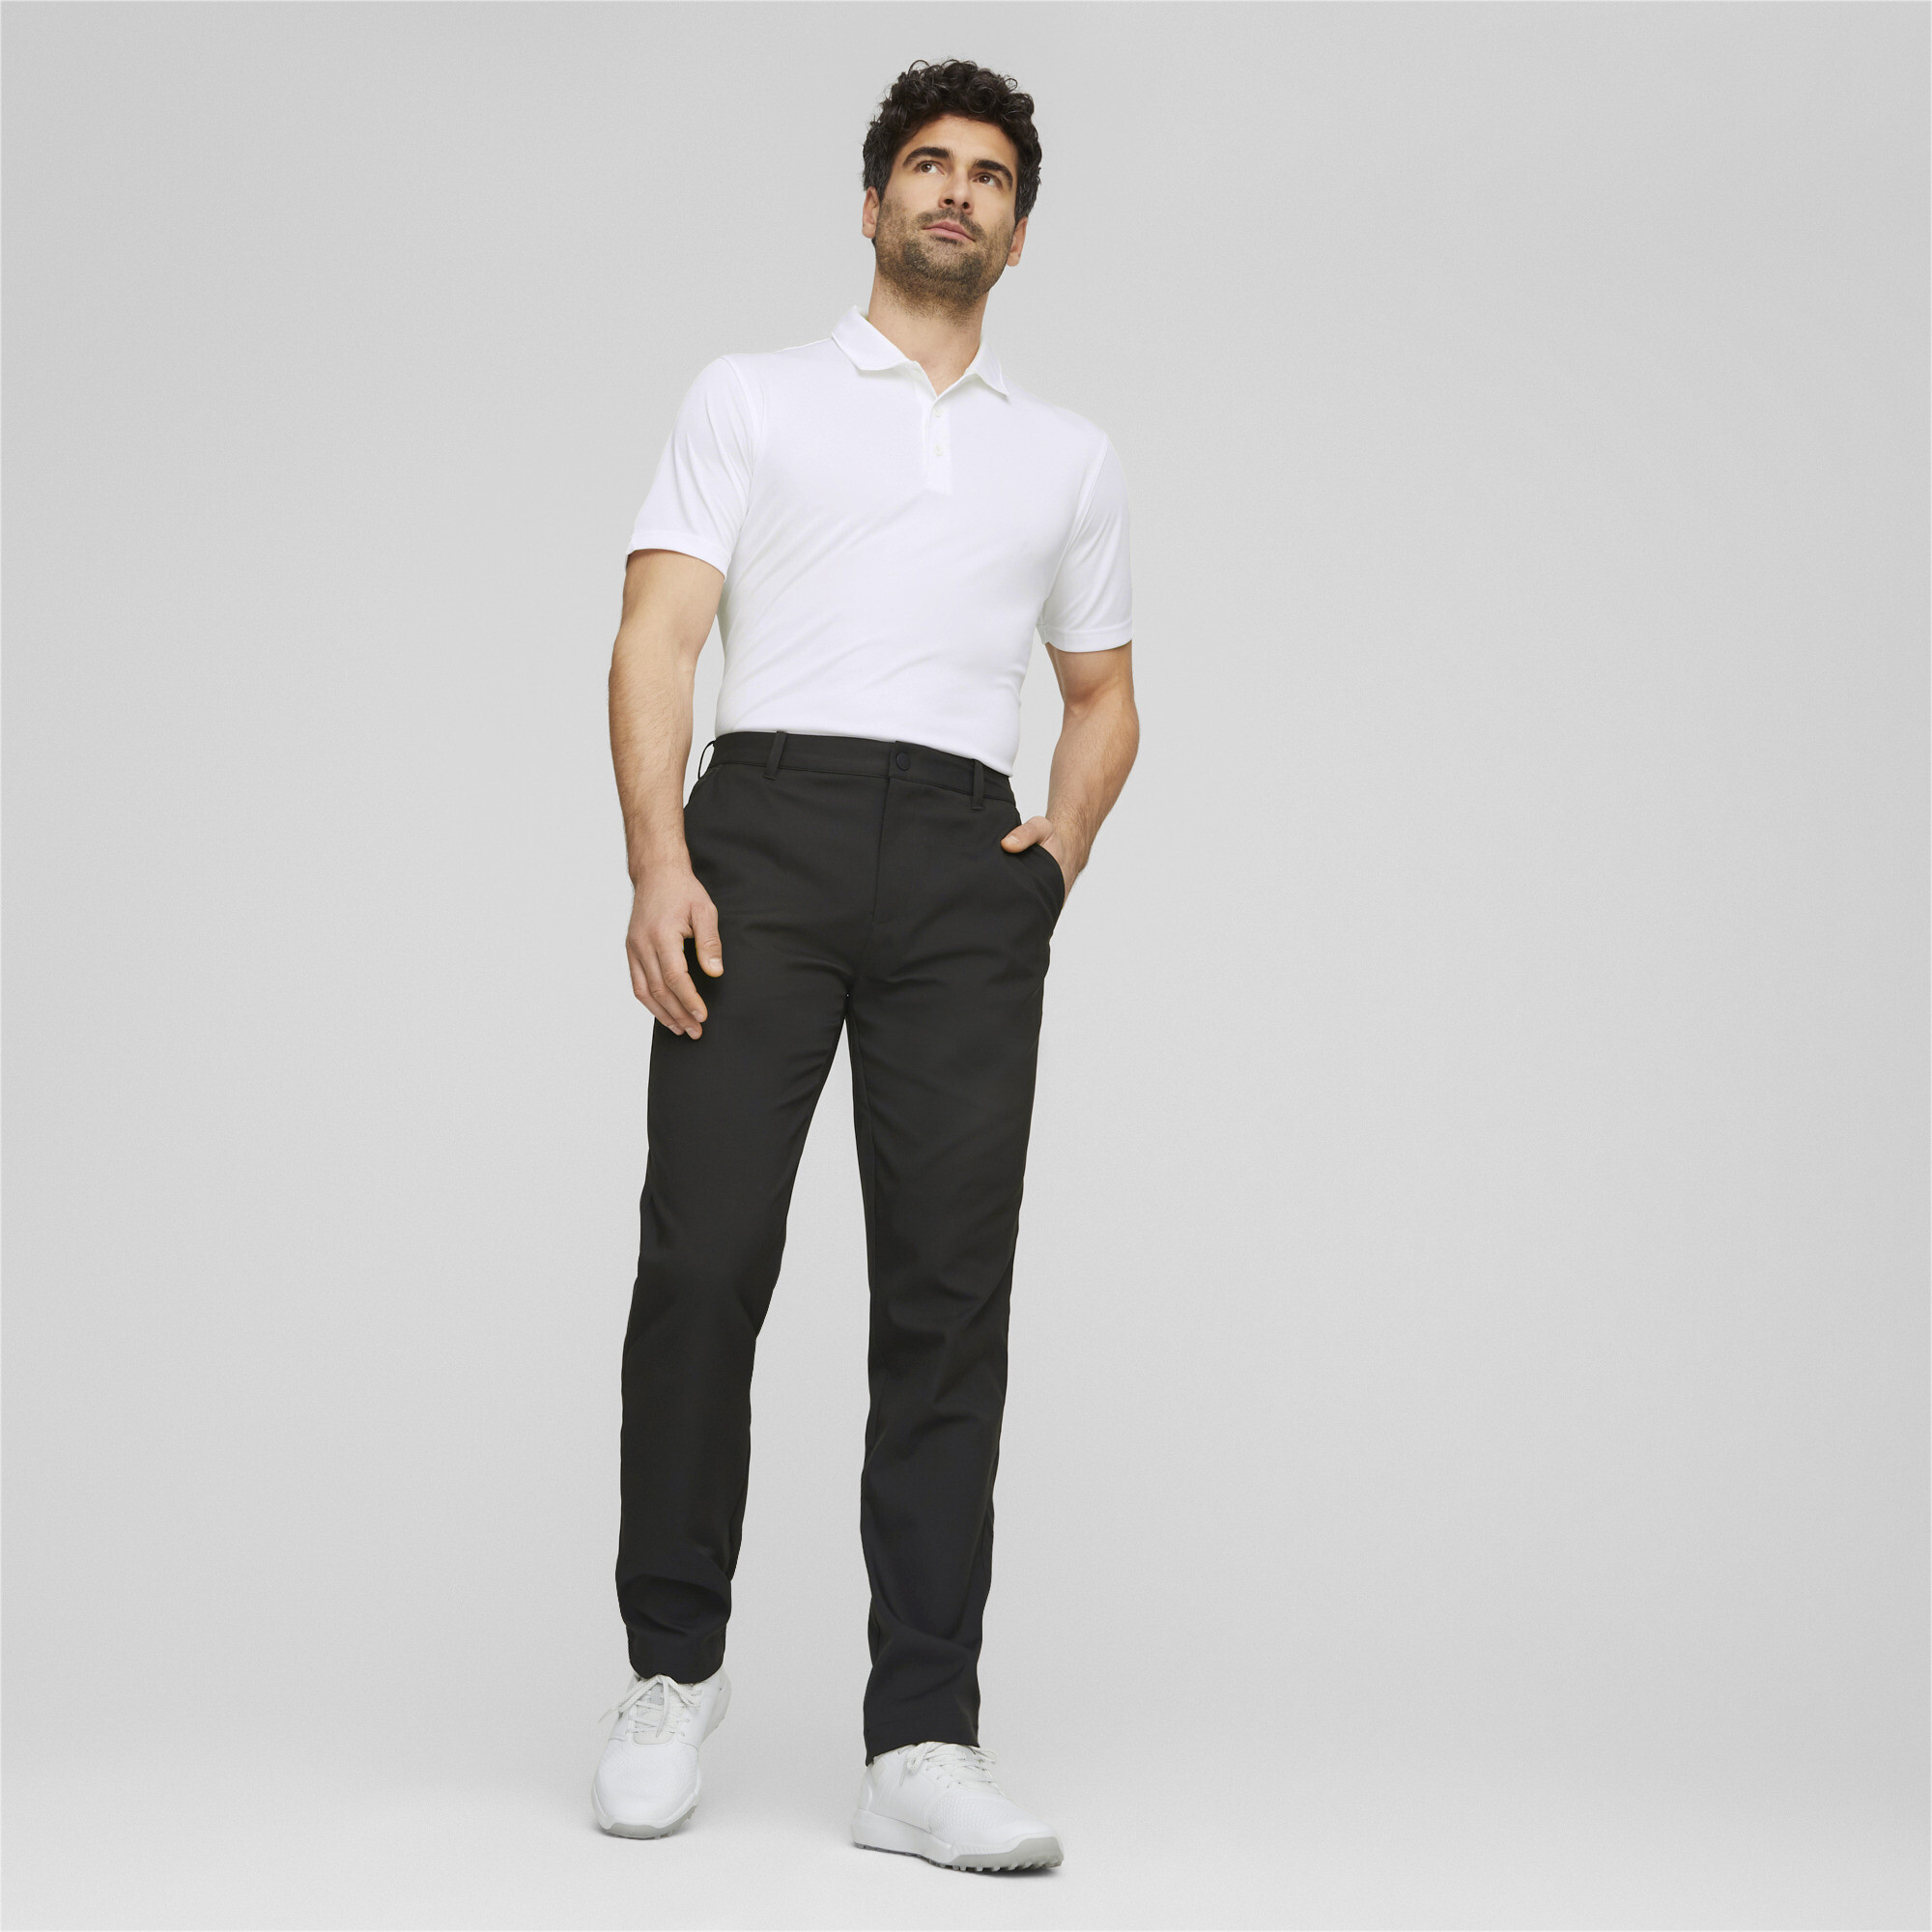 Men's Puma Dealer Golf Pants, Black, Size 40/34, Clothing